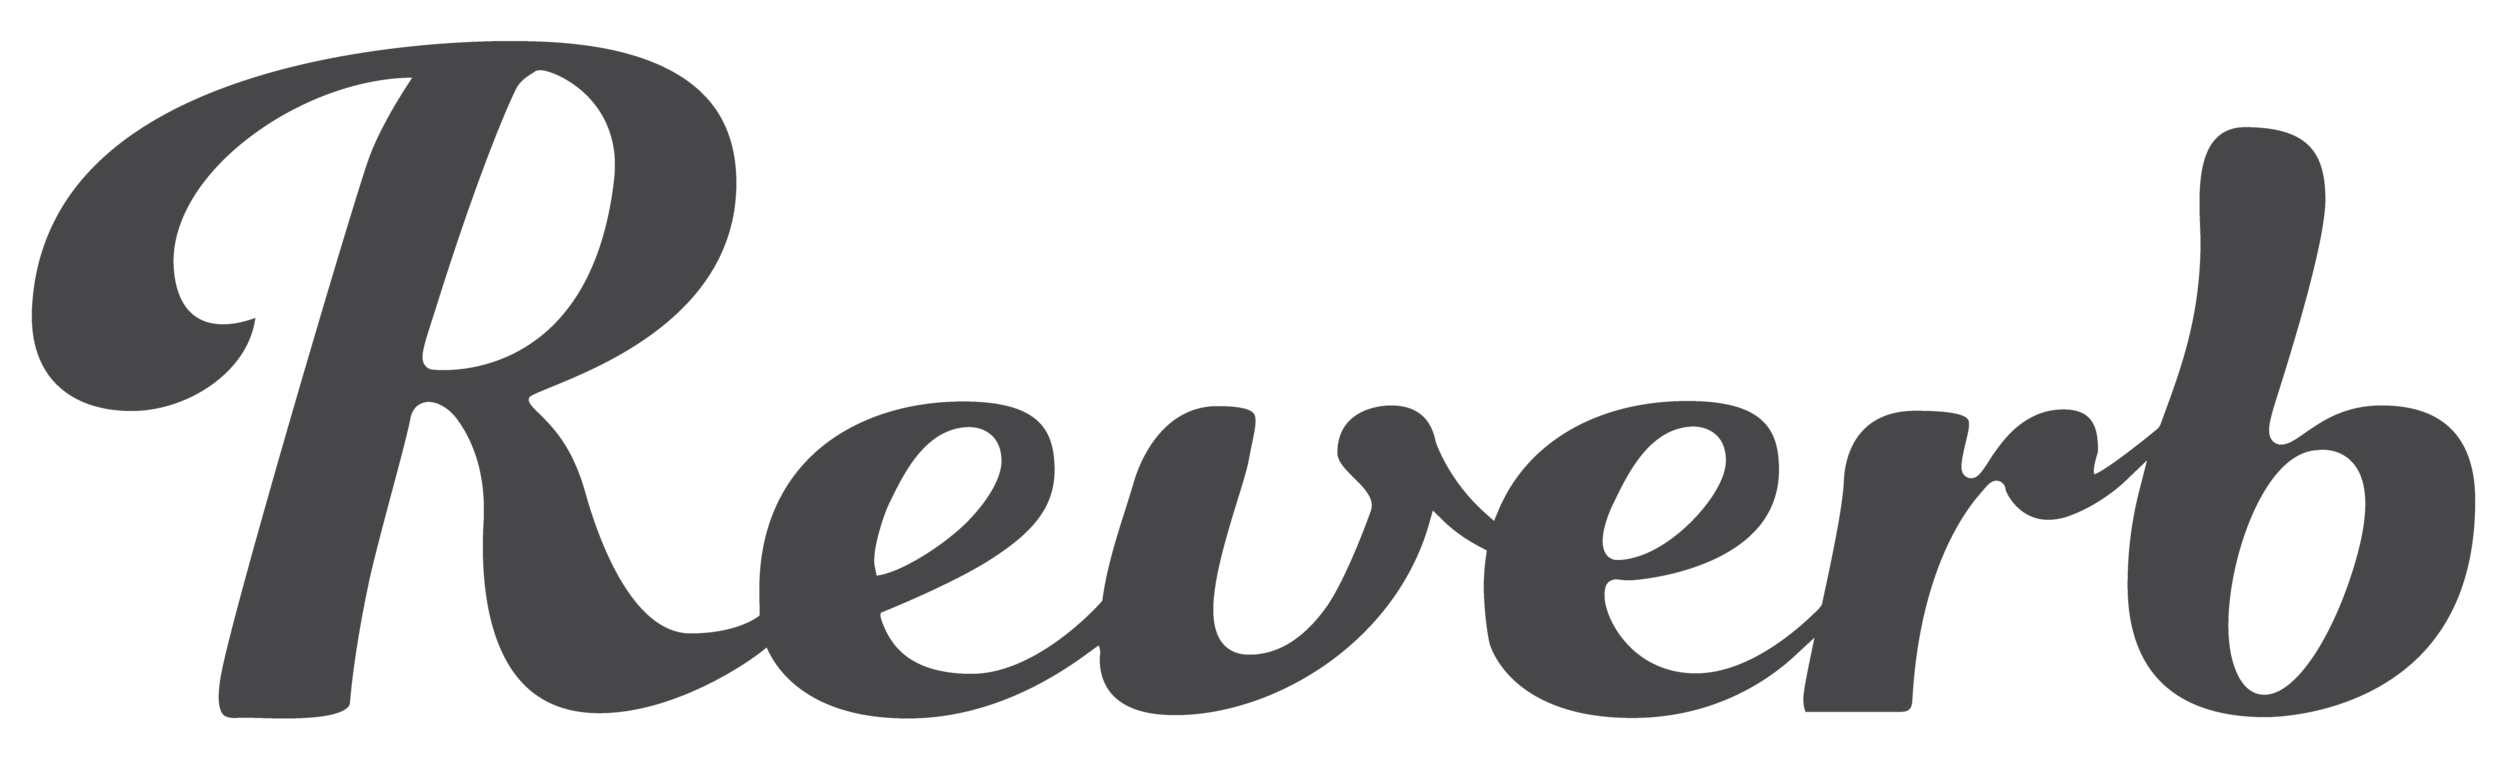 2015-Reverb-Logo_frcz70.png